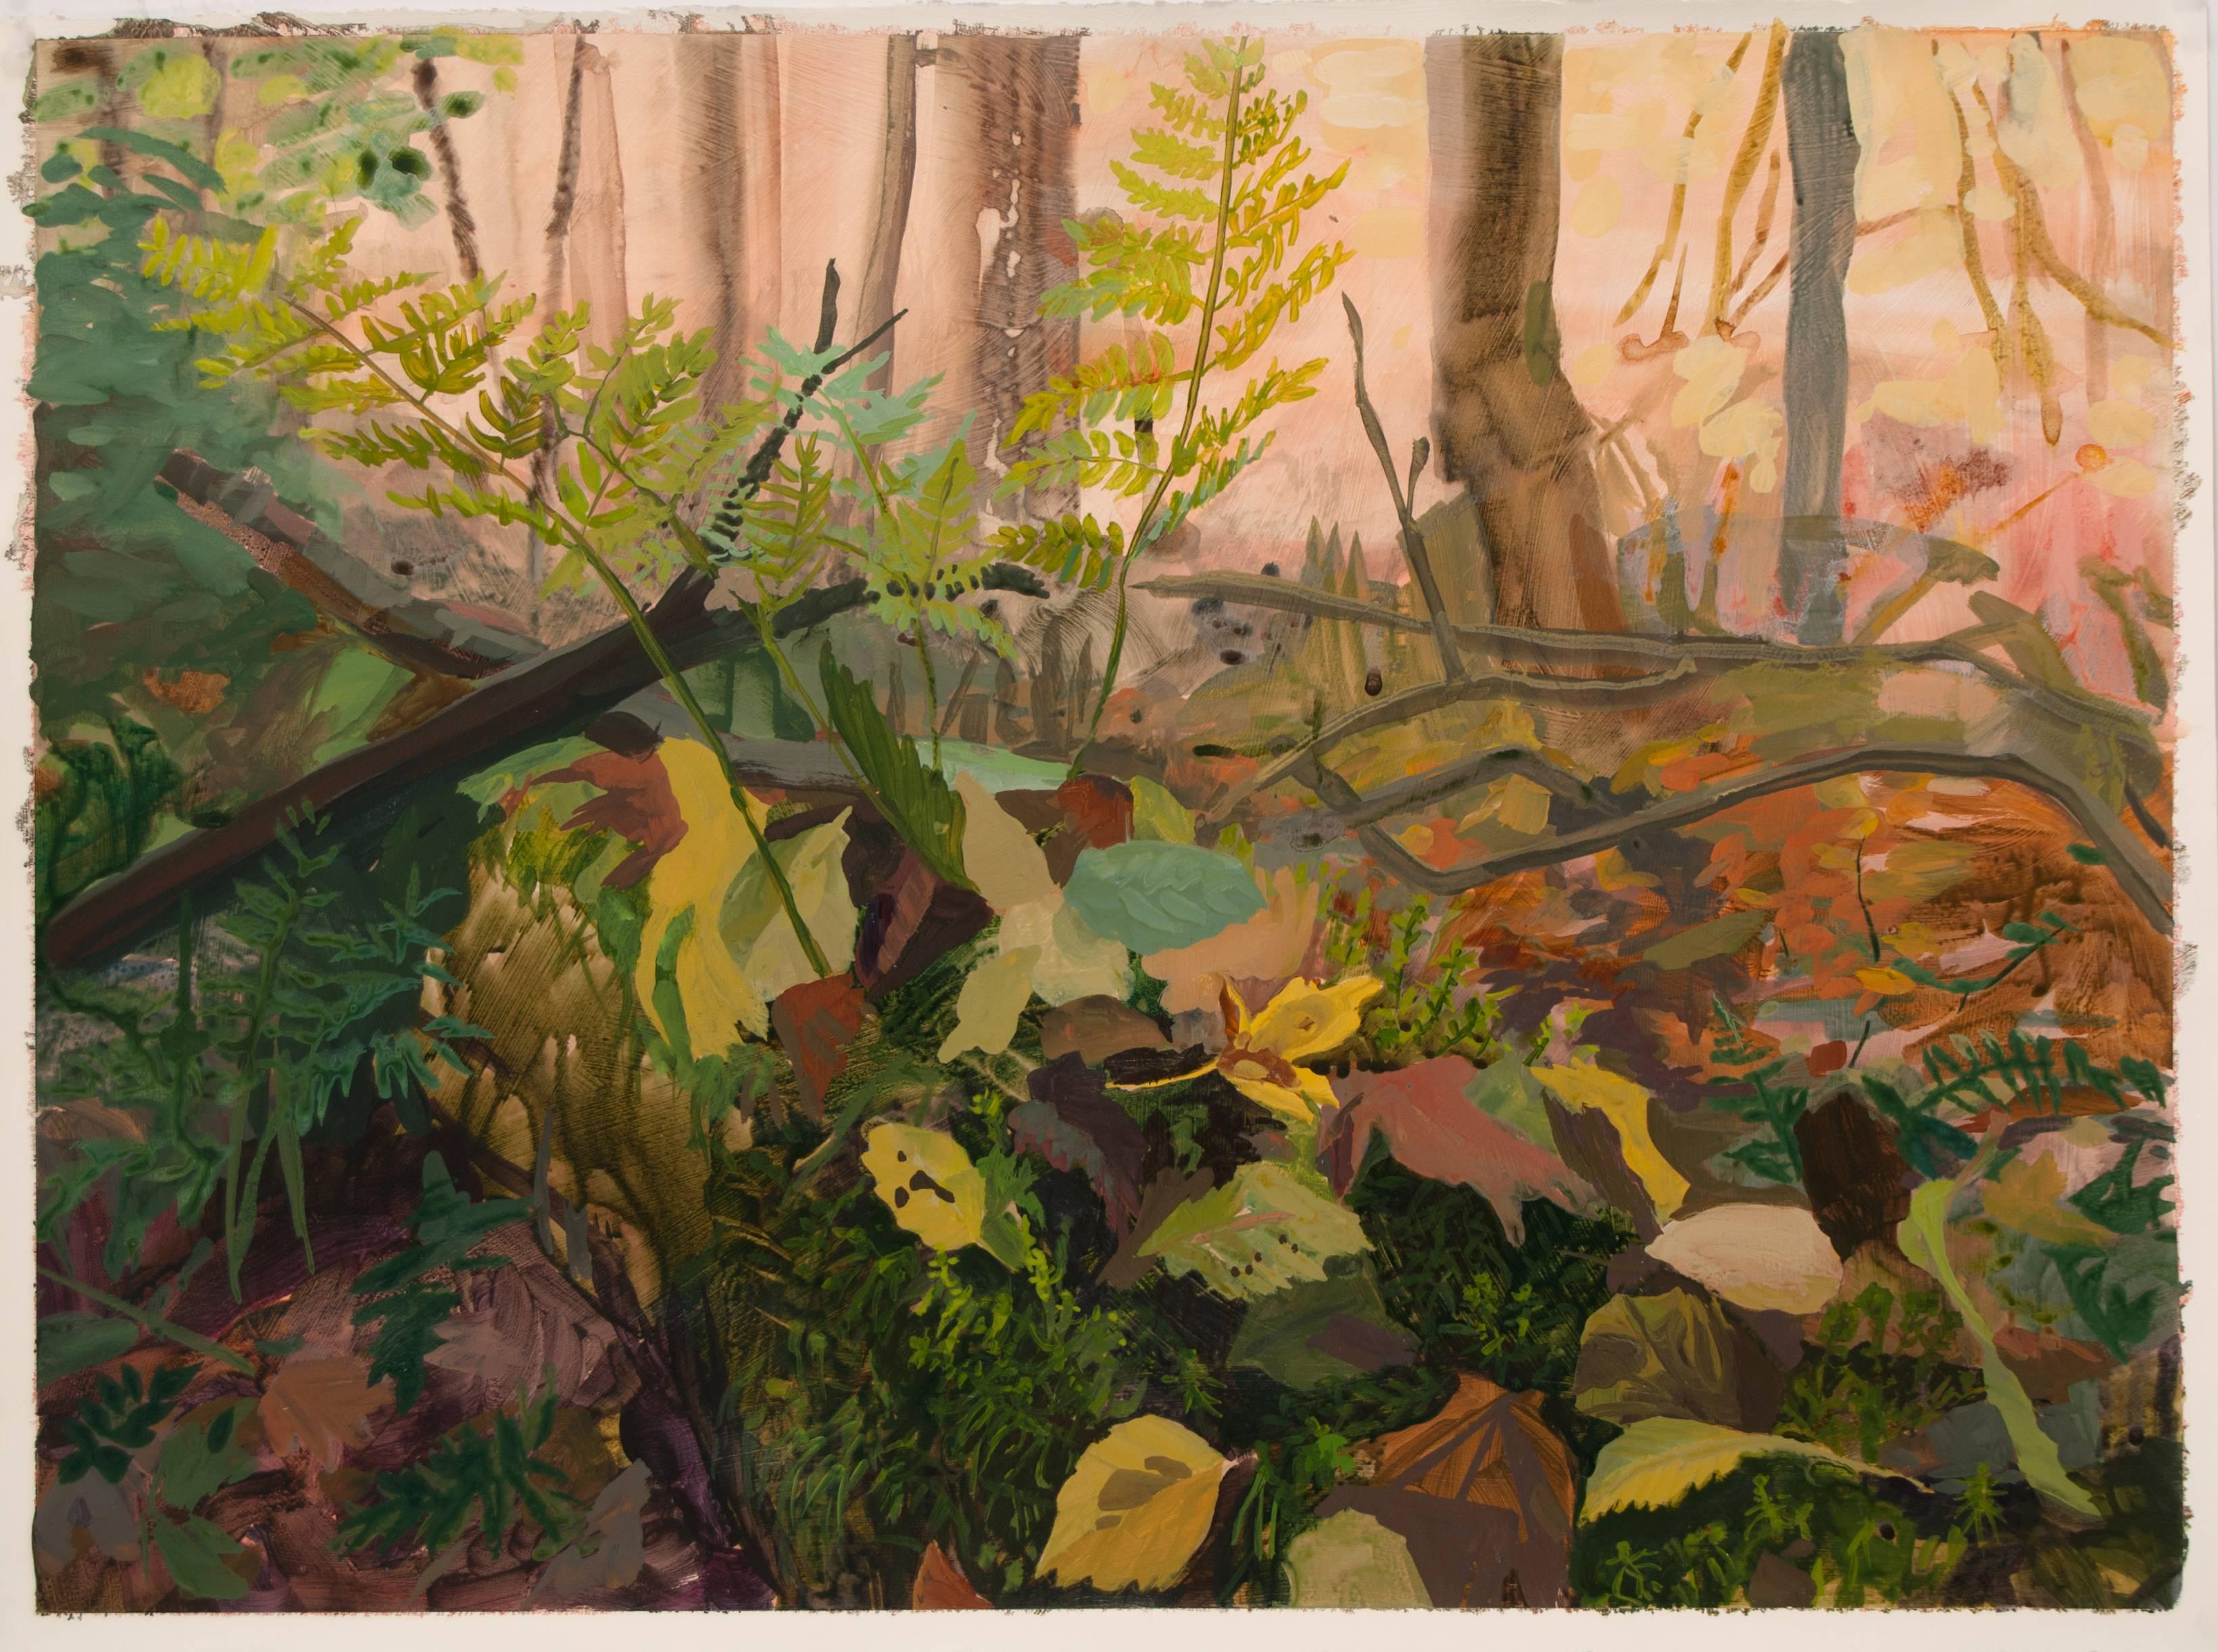 Kristin Musgnug - Fallen Log with Fallen Leaves at 1stdibs